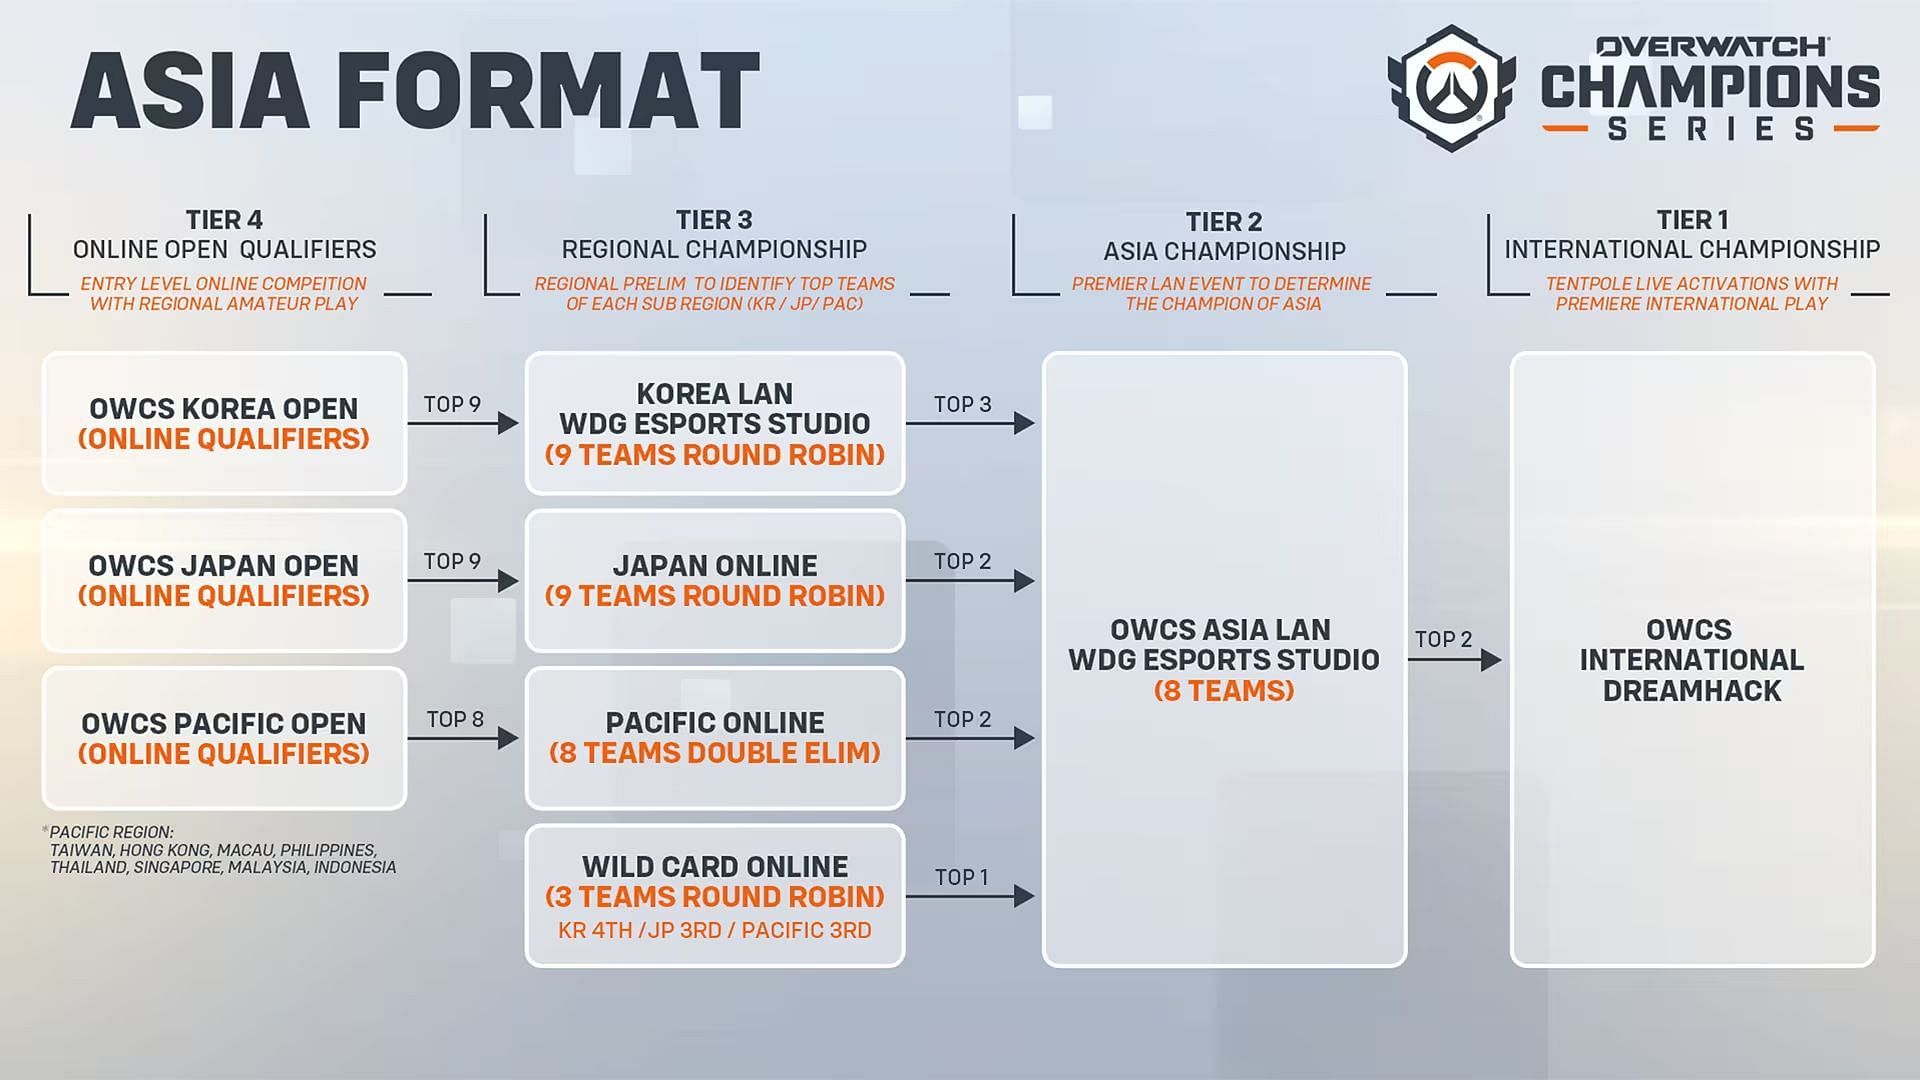 Asia Overwatch Champions Series format details (Image via Blizzard Entertainment)